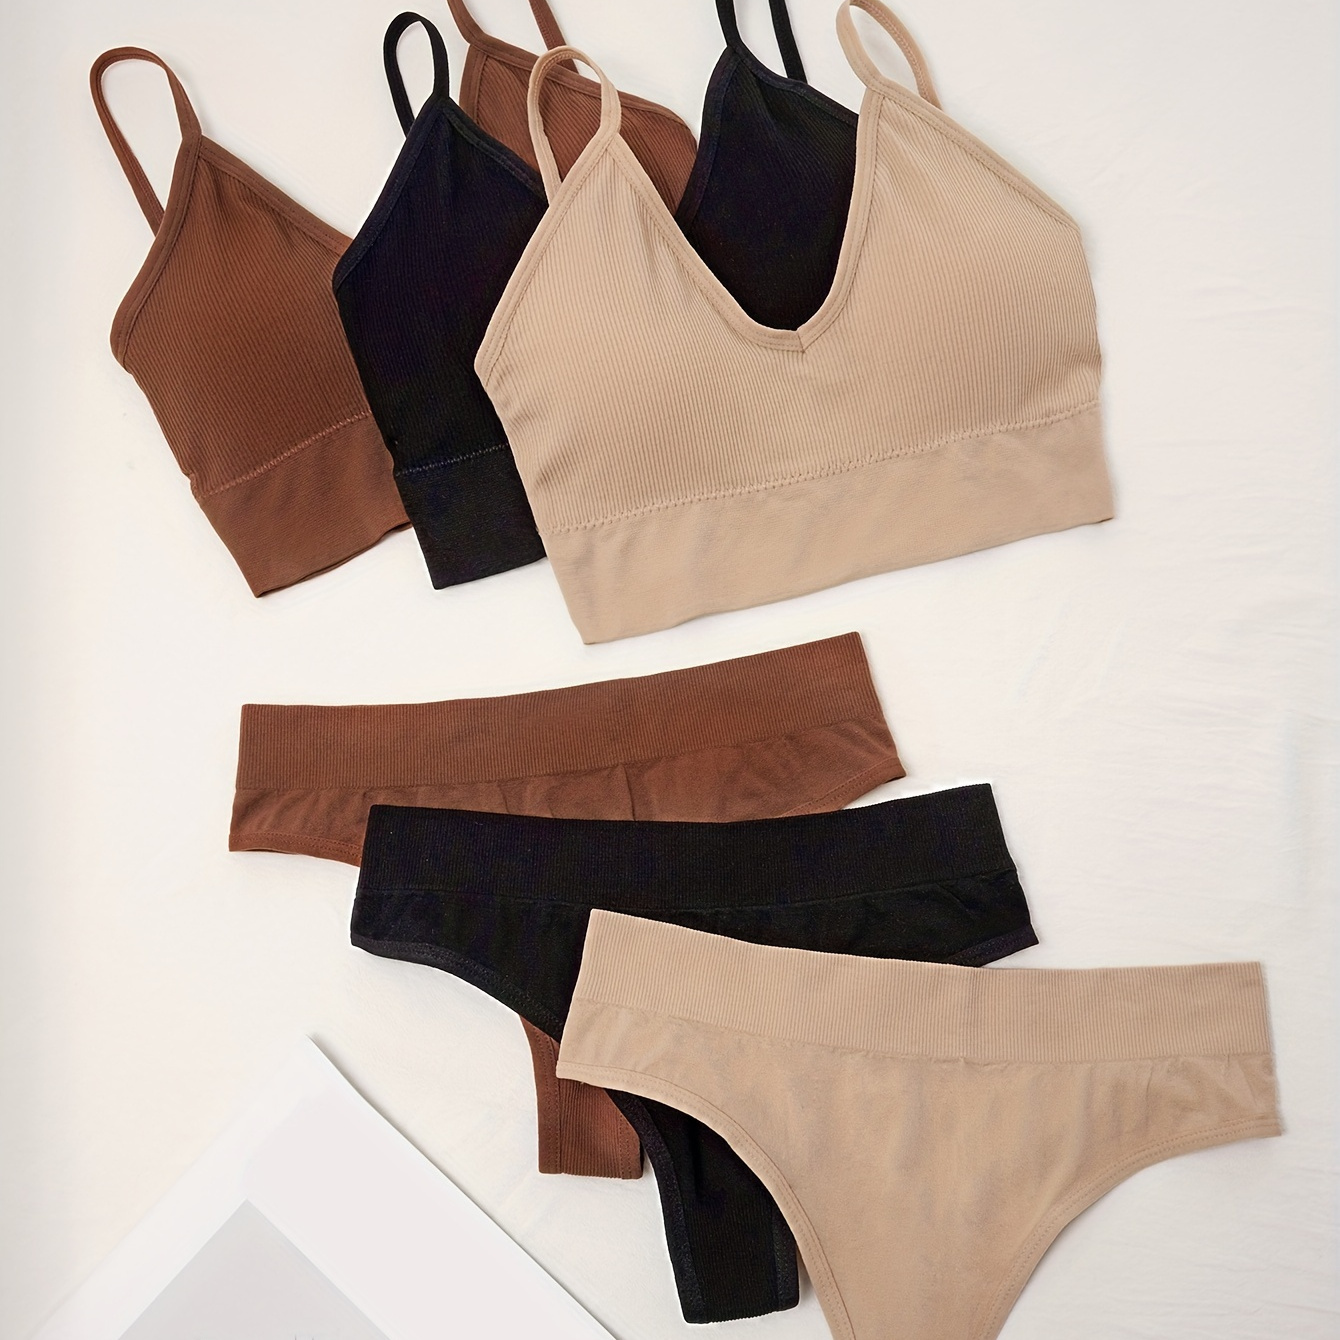 

3 Sets Ribbed Bra & Panties, Wireless Bralette & Thongs Lingerie Set, Women's Lingerie & Underwear